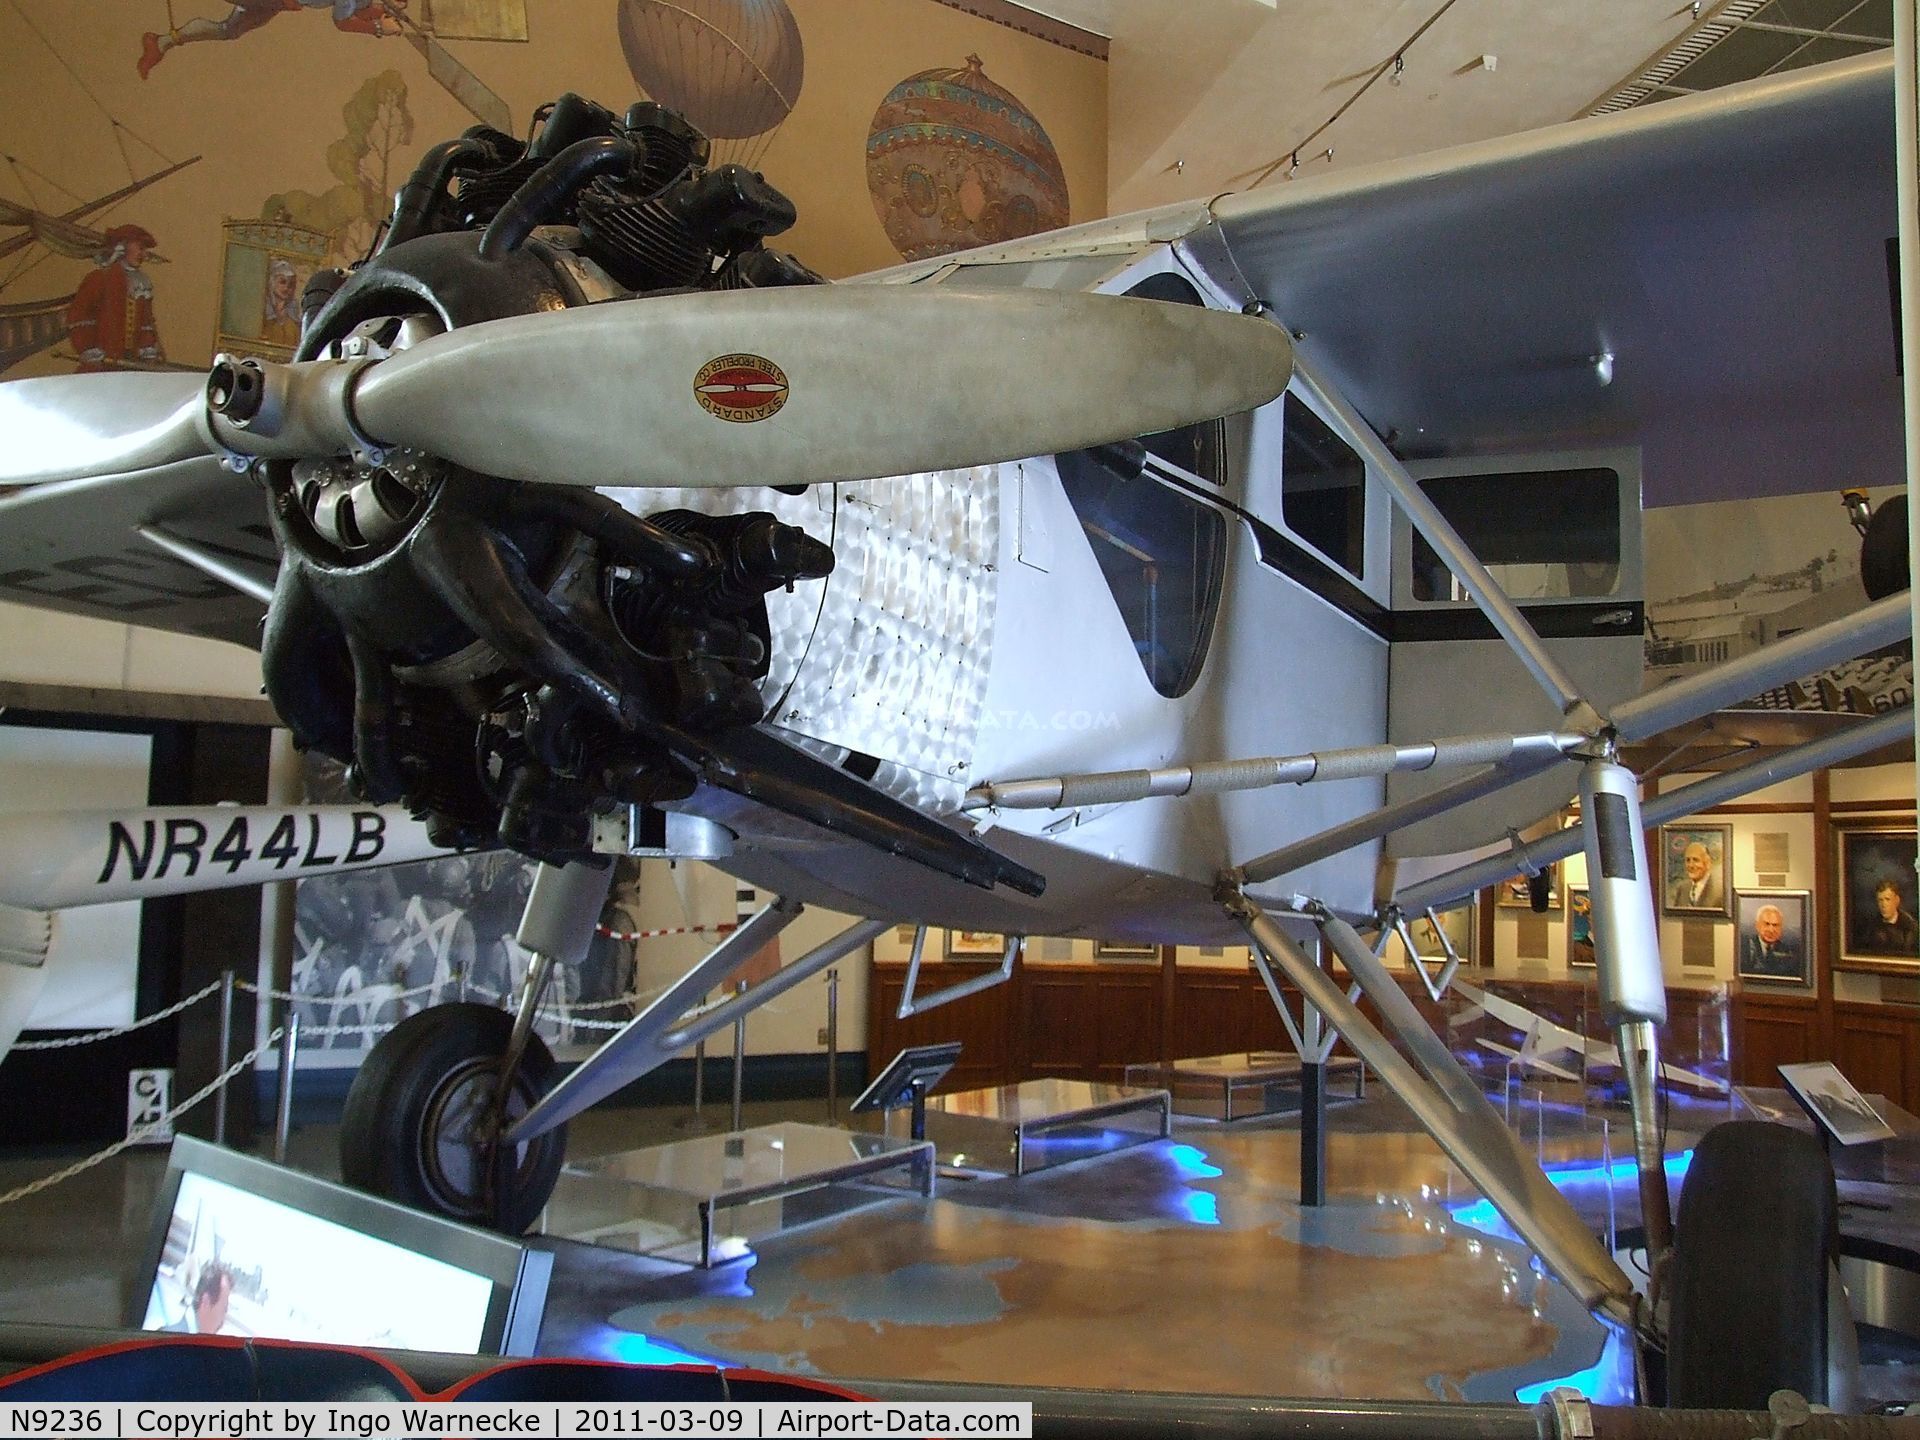 N9236, 1929 Ryan Aircraft B-5 C/N 194, Ryan B-5 Brougham (displayed representing NC731M) at the San Diego Air & Space Museum, San Diego CA